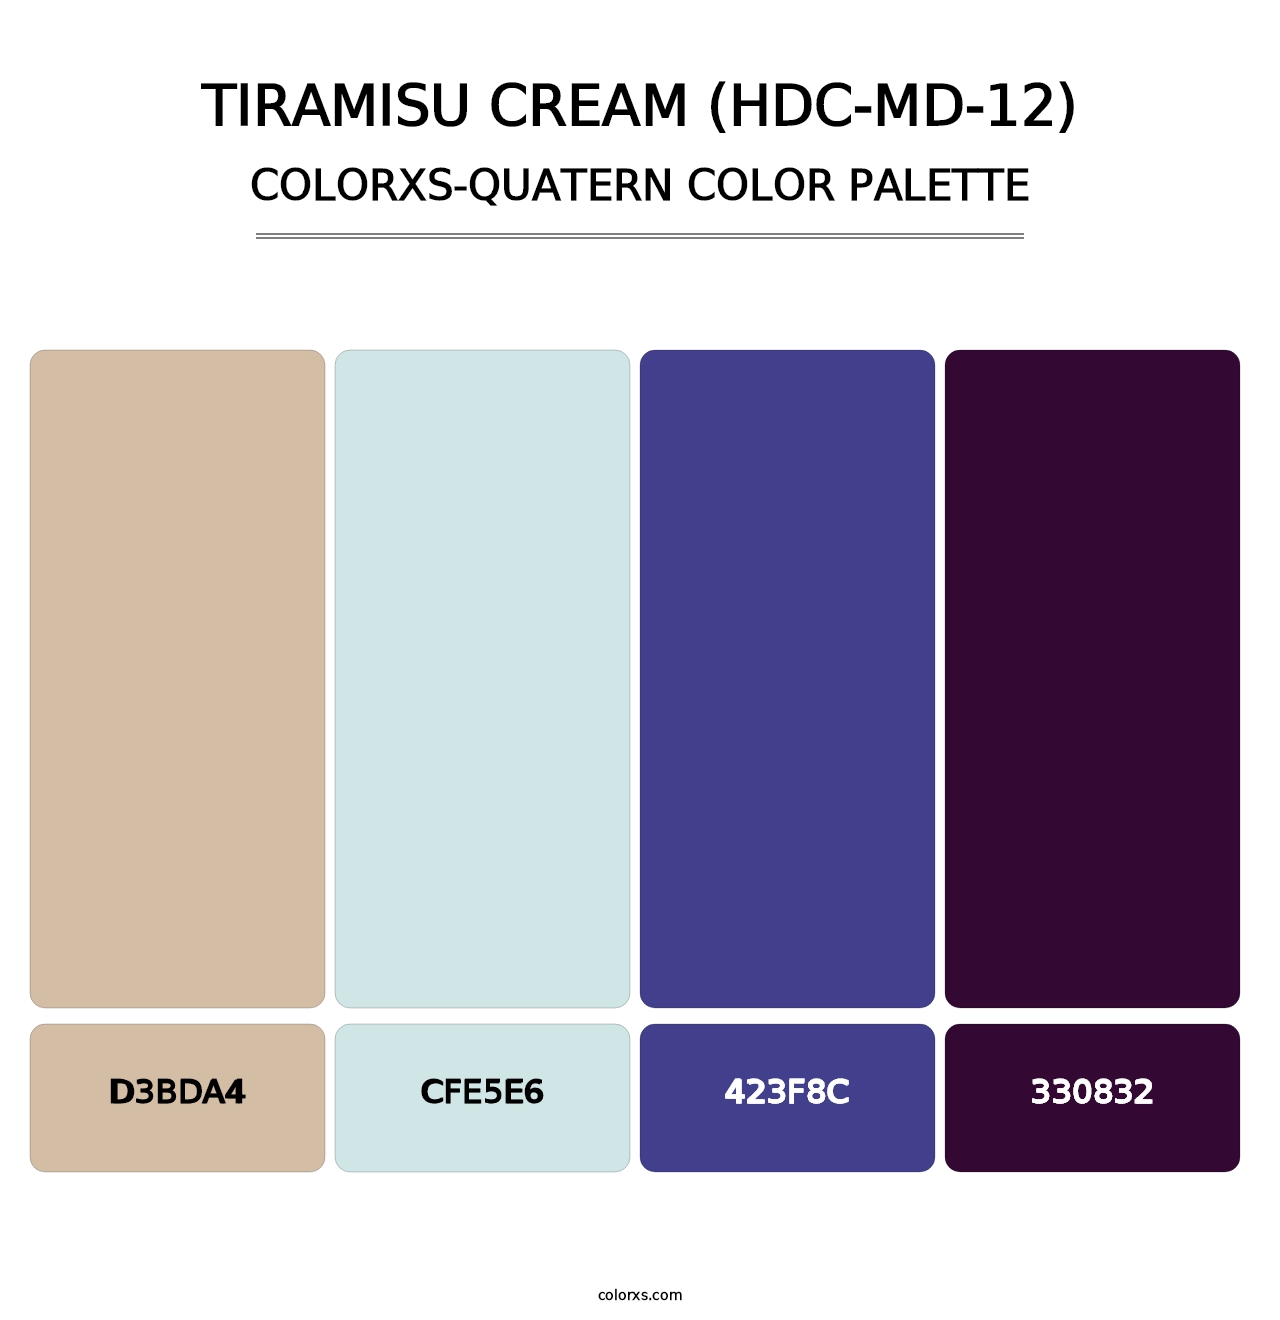 Tiramisu Cream (HDC-MD-12) - Colorxs Quatern Palette